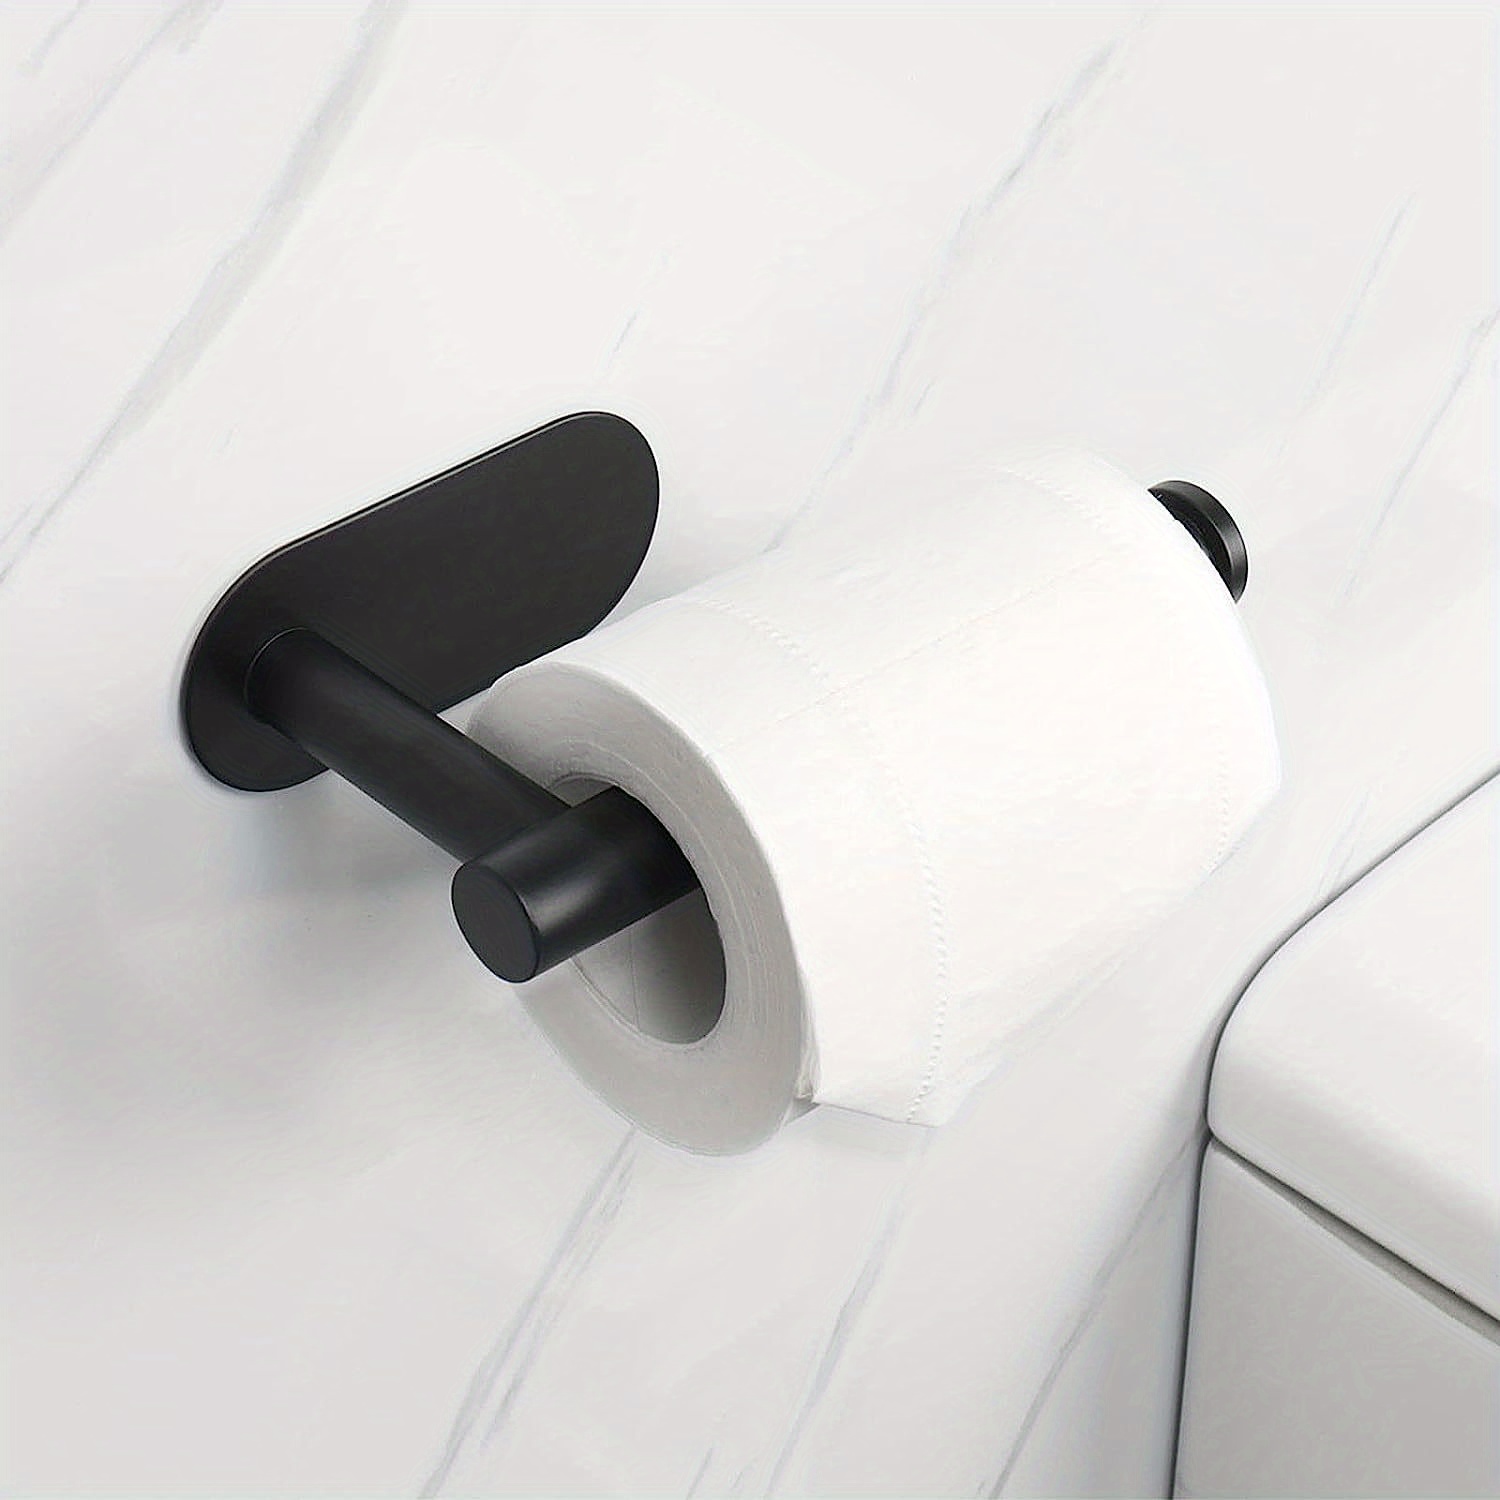 Black Toilet Paper Holder, Tissue Holder for Bathroom, Washroom